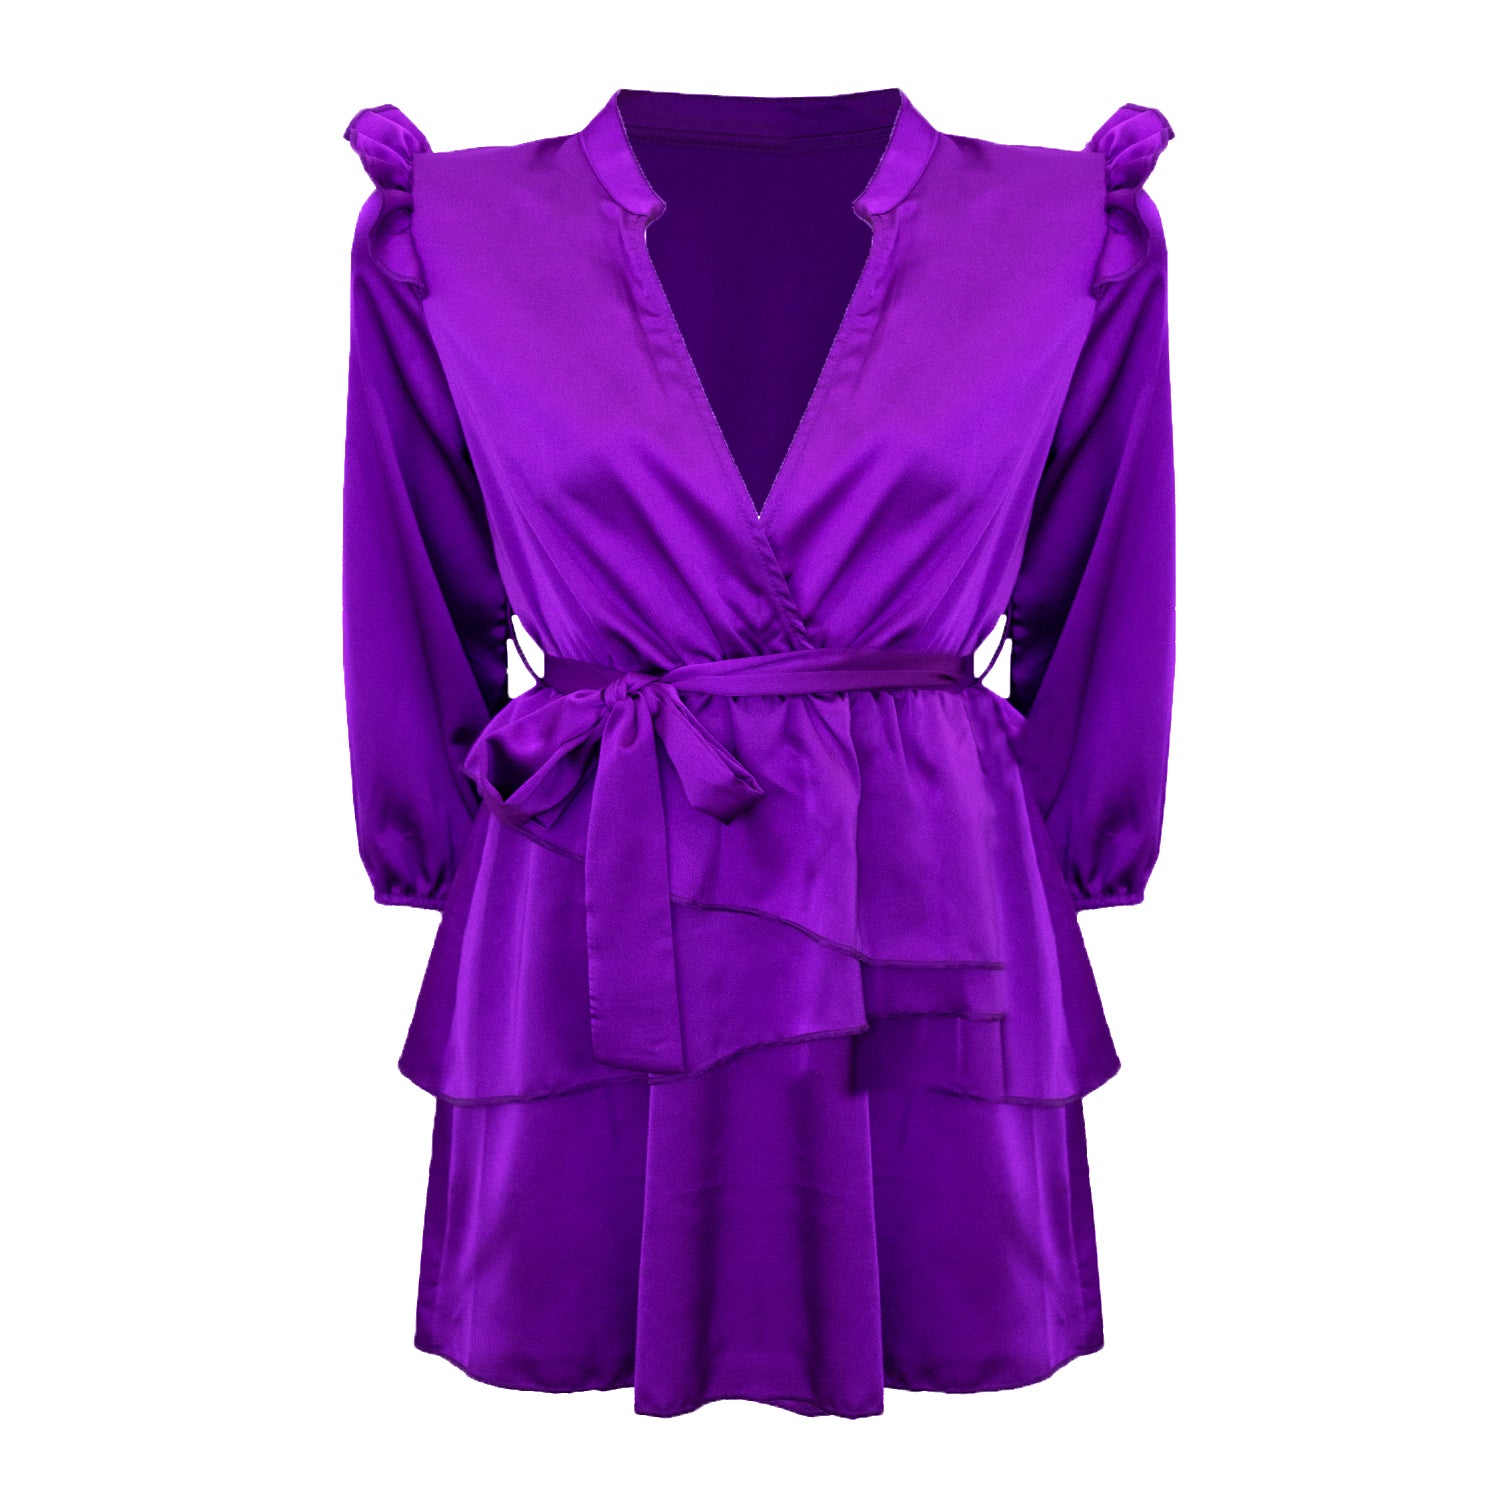 Nathaniel Ward Ontwikkelen Handig Satina dress purple | Satijnen jurk paars met ruffles en strik detail |  Boutique 22 – Boutique 22